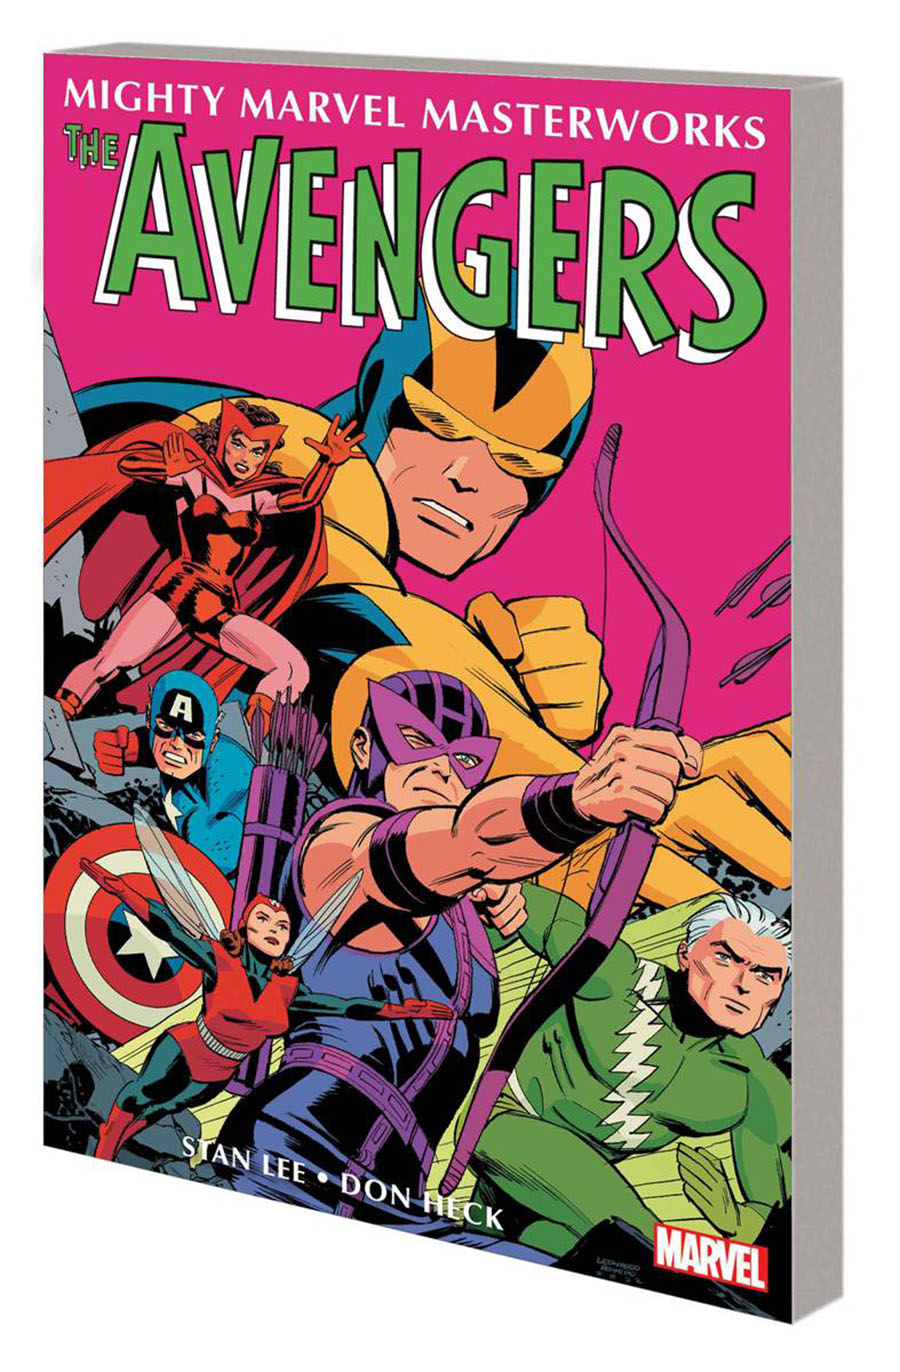 Mighty Marvel Masterworks Avengers Vol 3 Among Us Walks A Goliath GN Book Market Leonardo Romero Cover